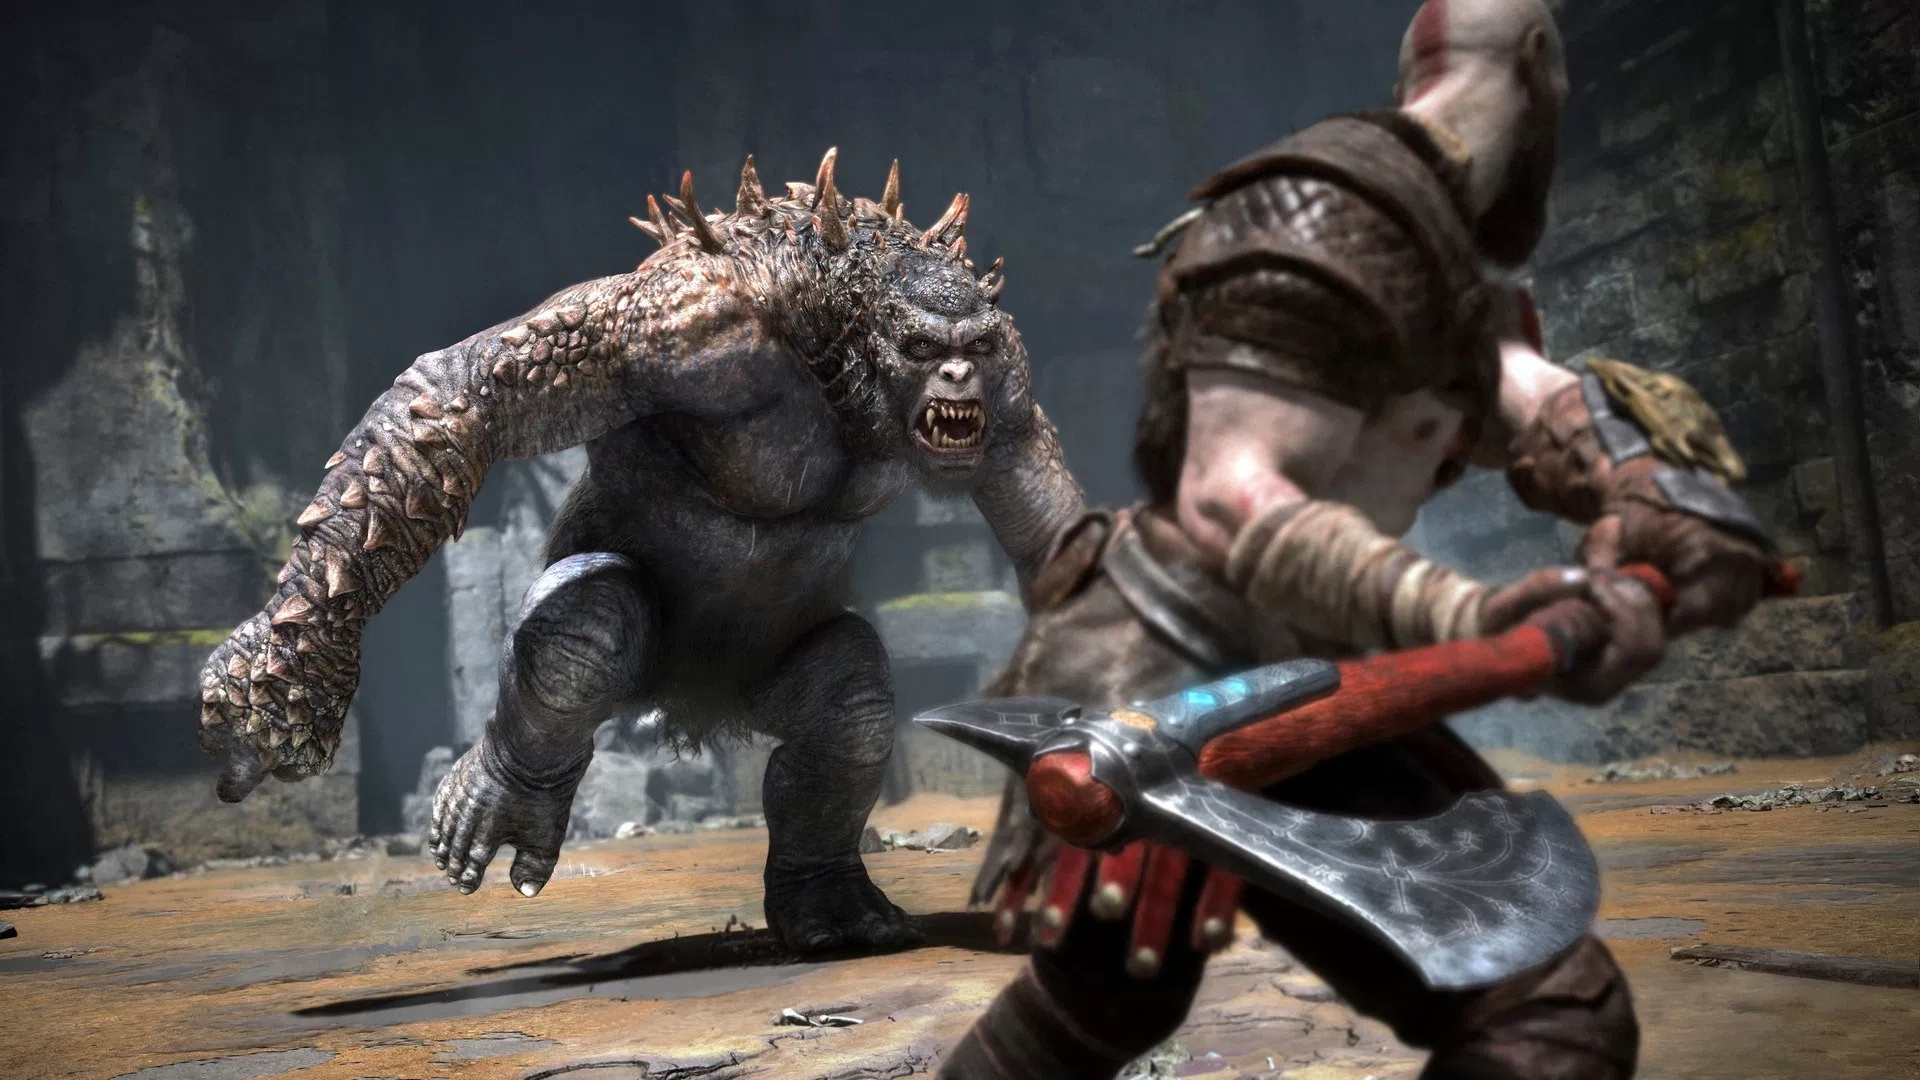 PC God Of War ќе донесе побрзи фрејмови на Amd Gpus како и на Nvidia